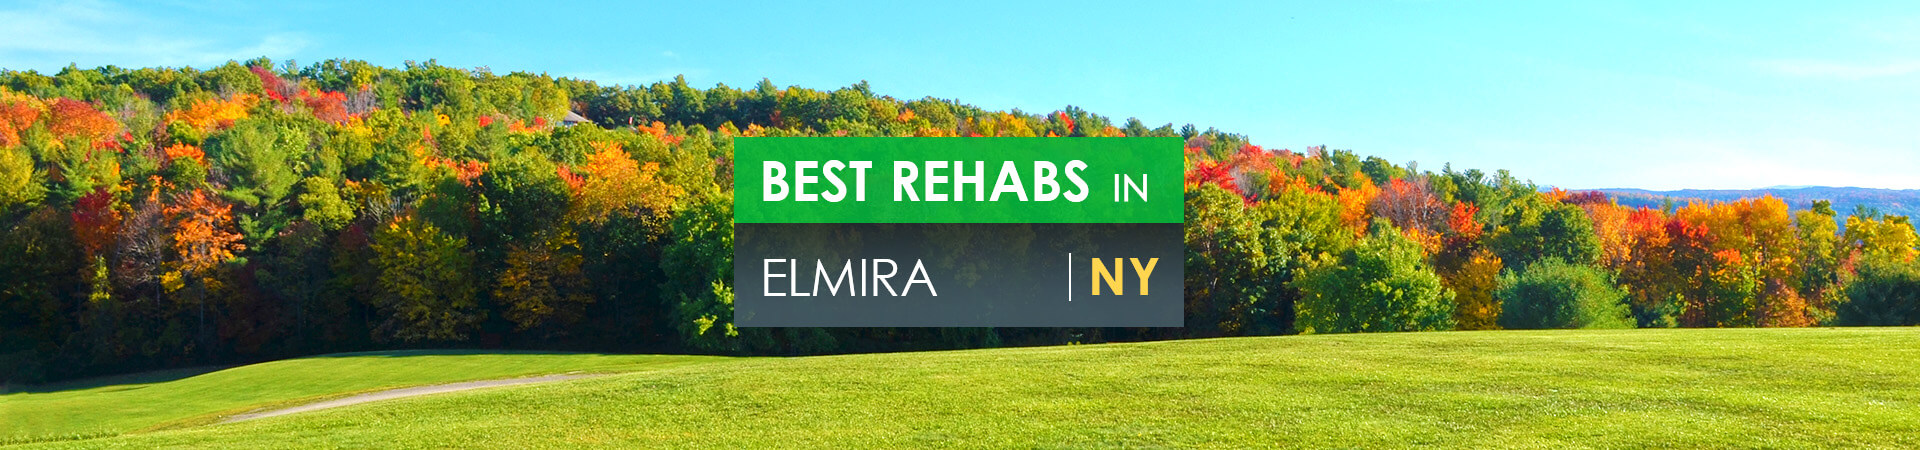 Best rehabs in Elmira, NY